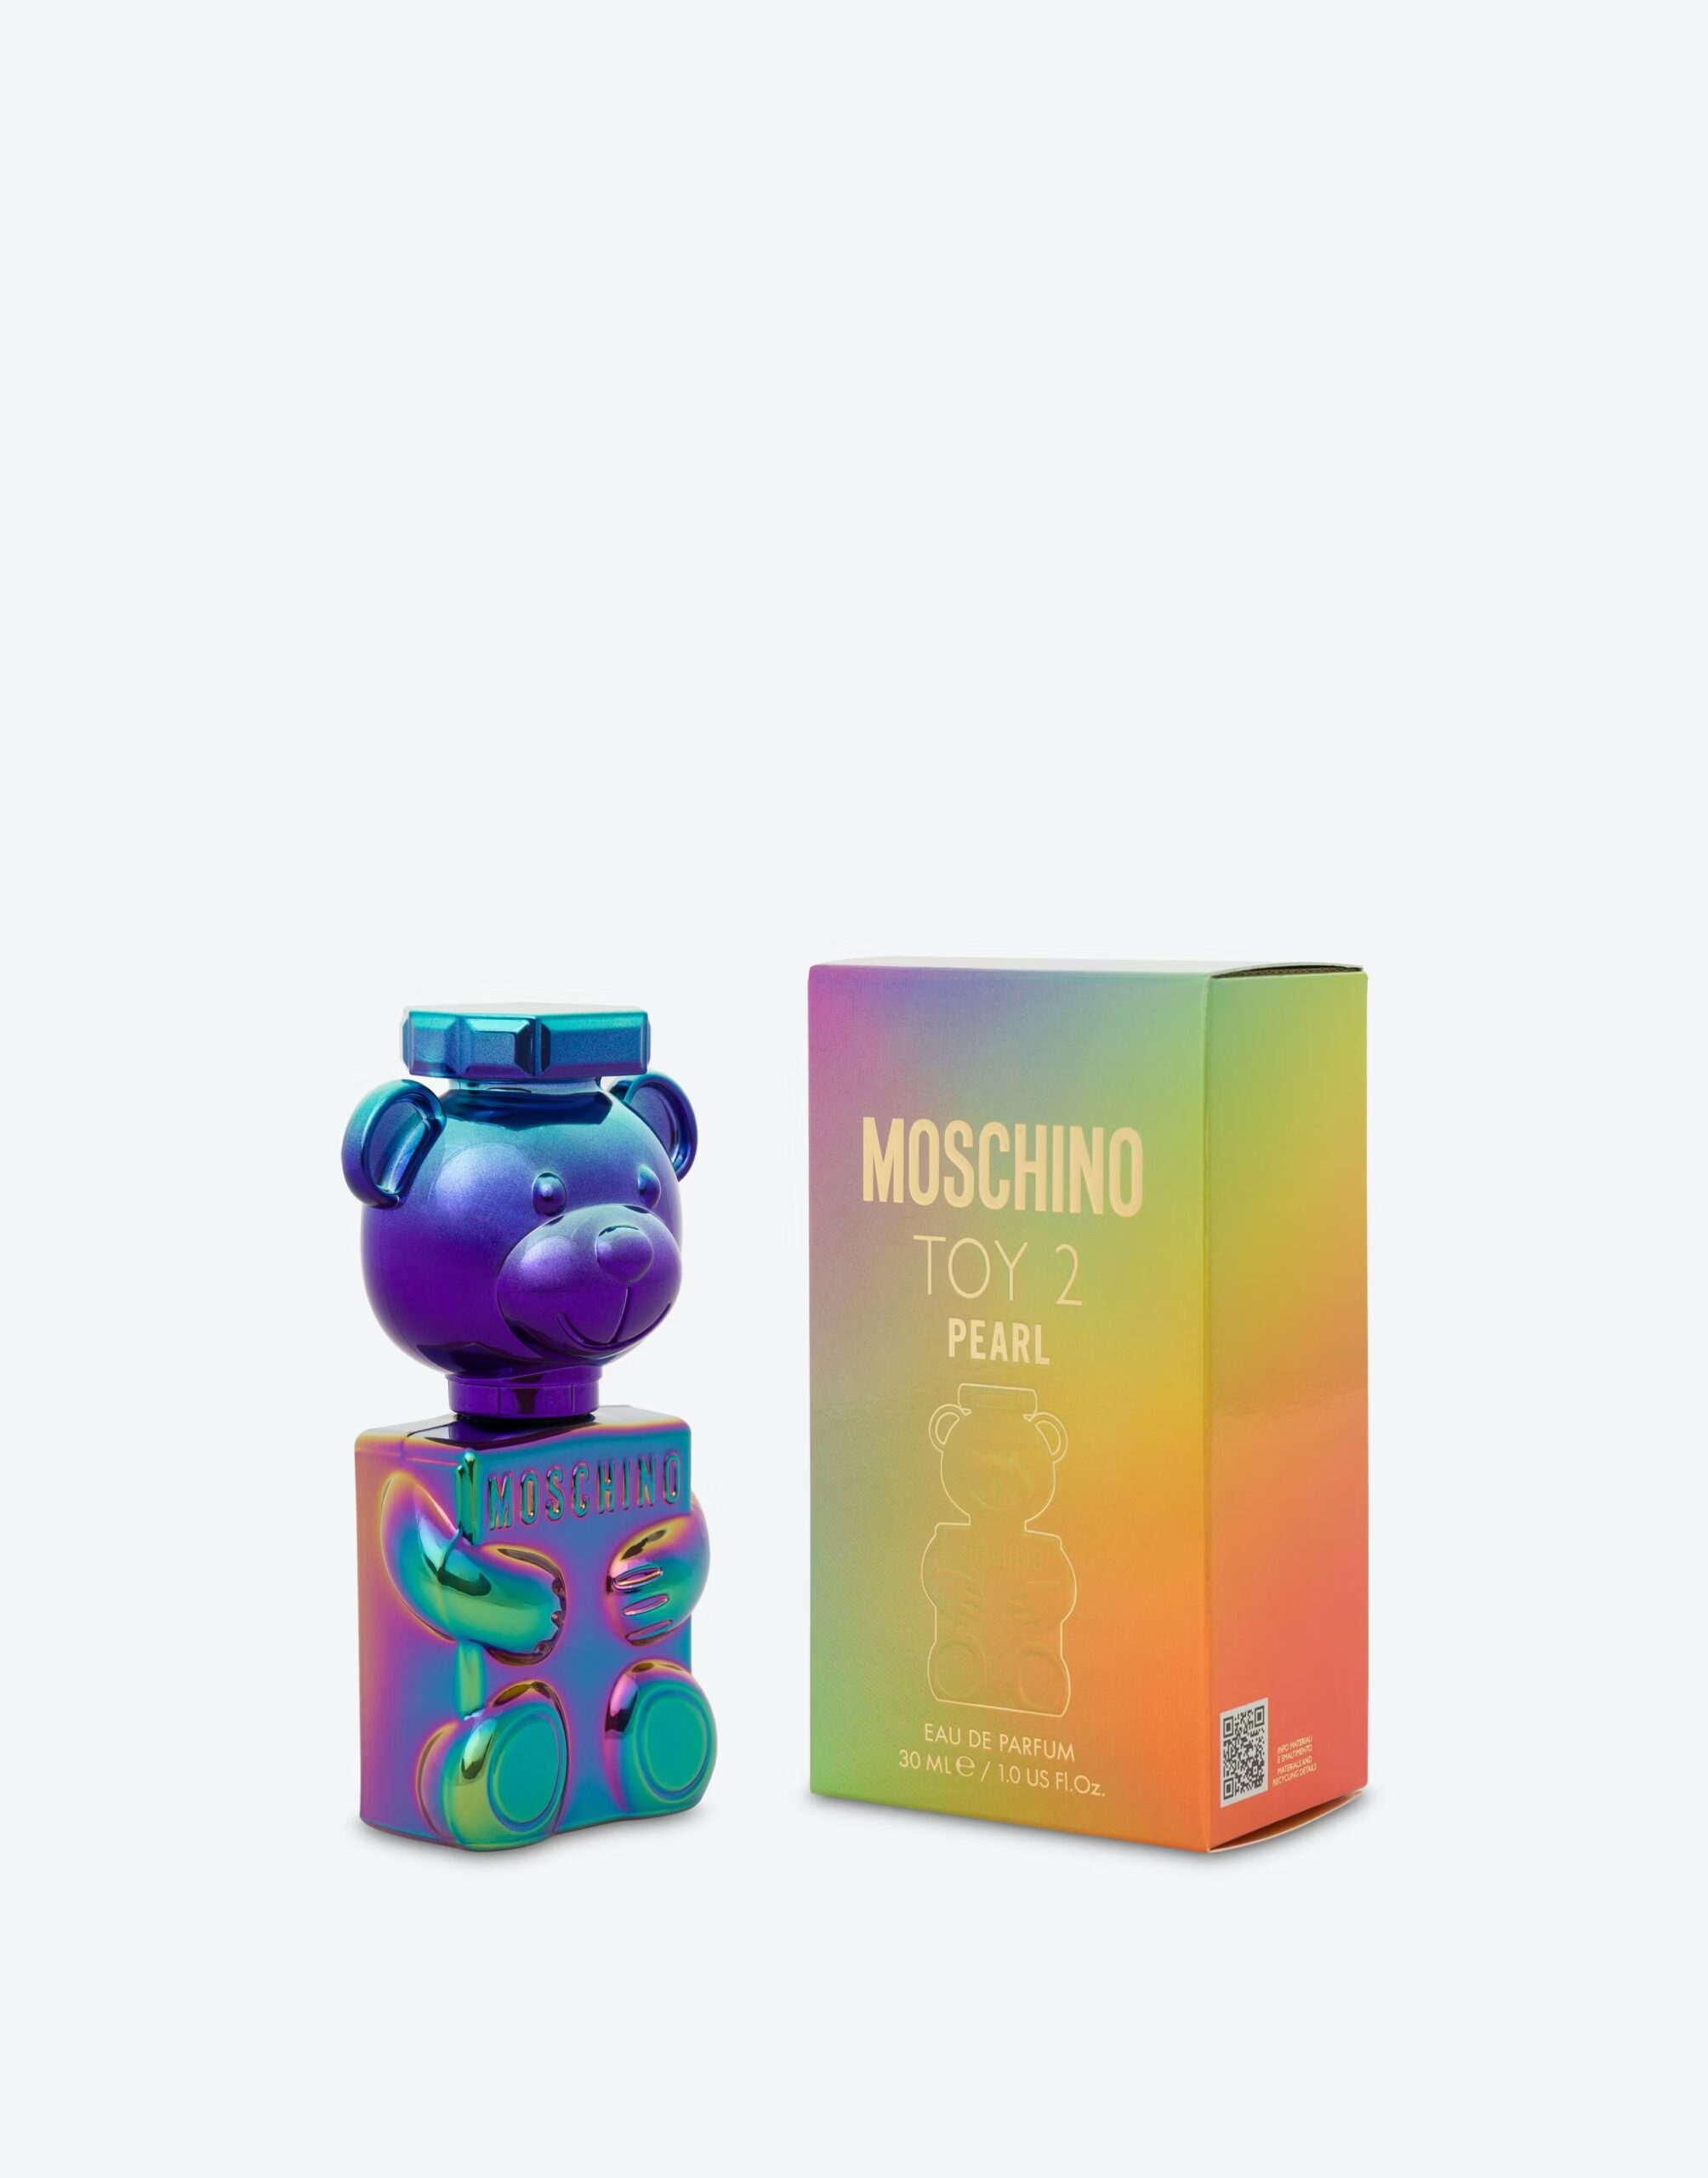 Moschino Toy 2 Pearl - Eau de Parfum - 30 ml